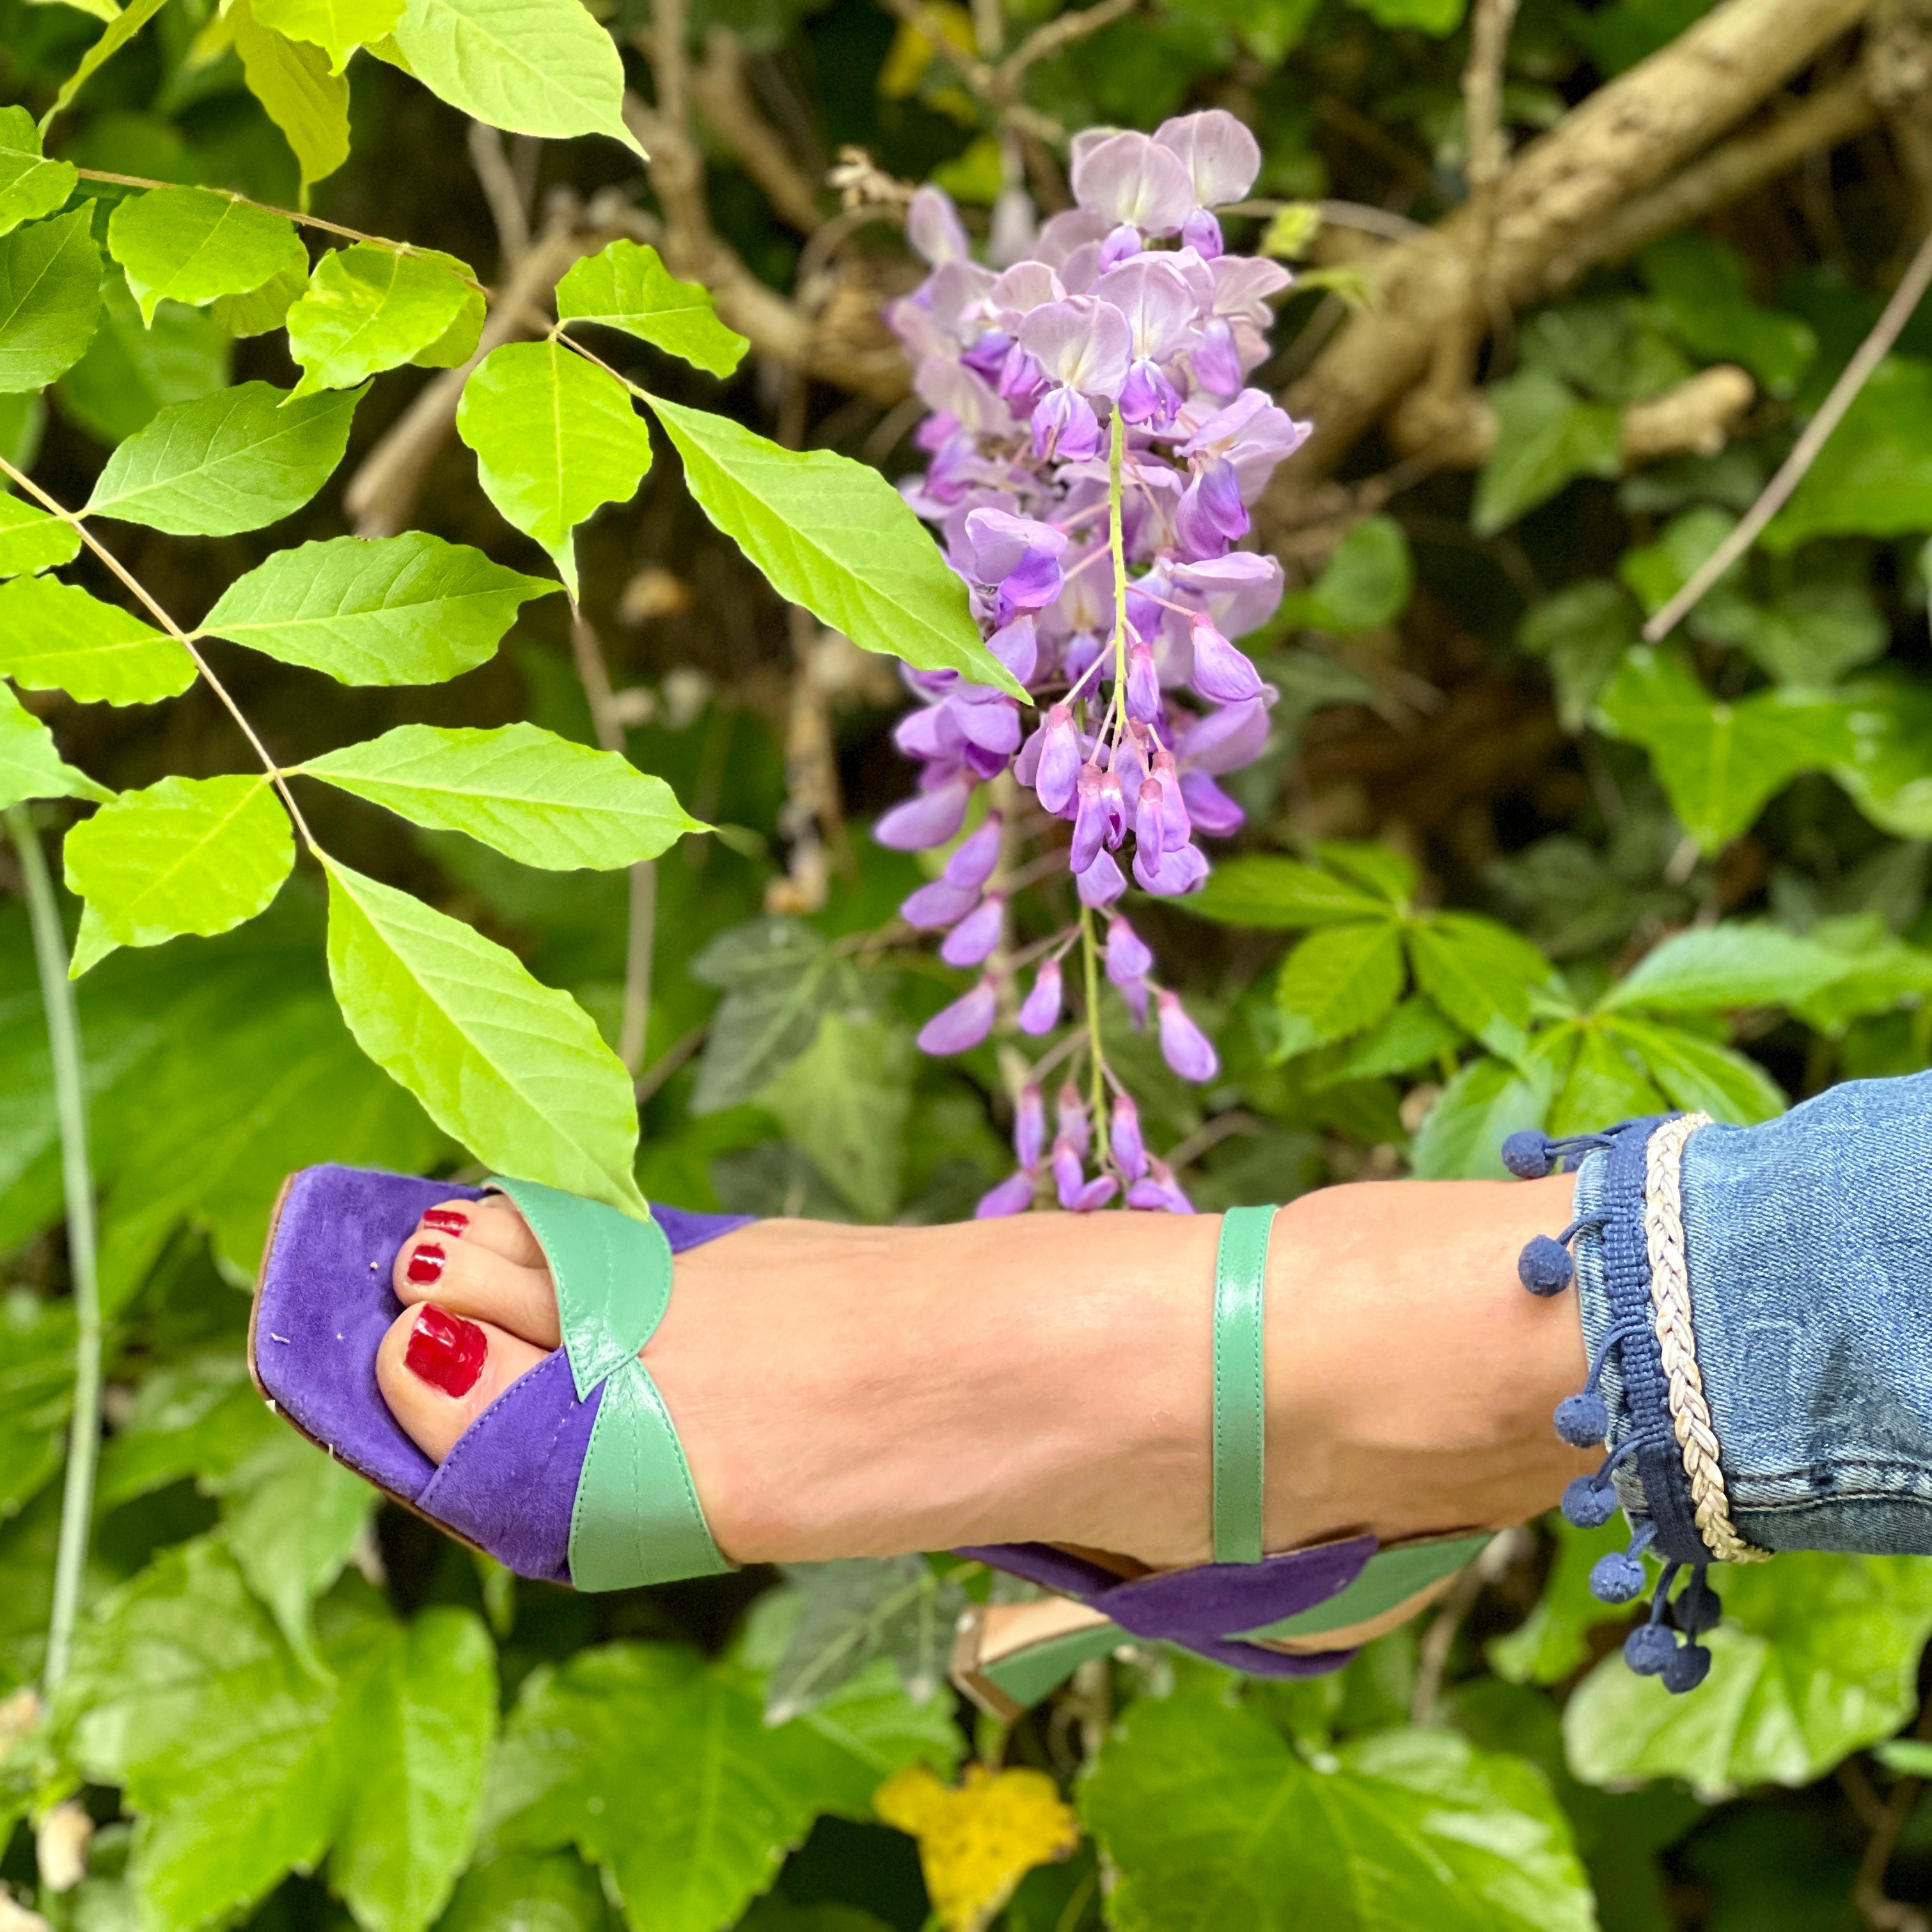 Mercurio Violet sandalo con tacco 7,5 cm. in camoscio viola e nappa verde artigianale Toscano